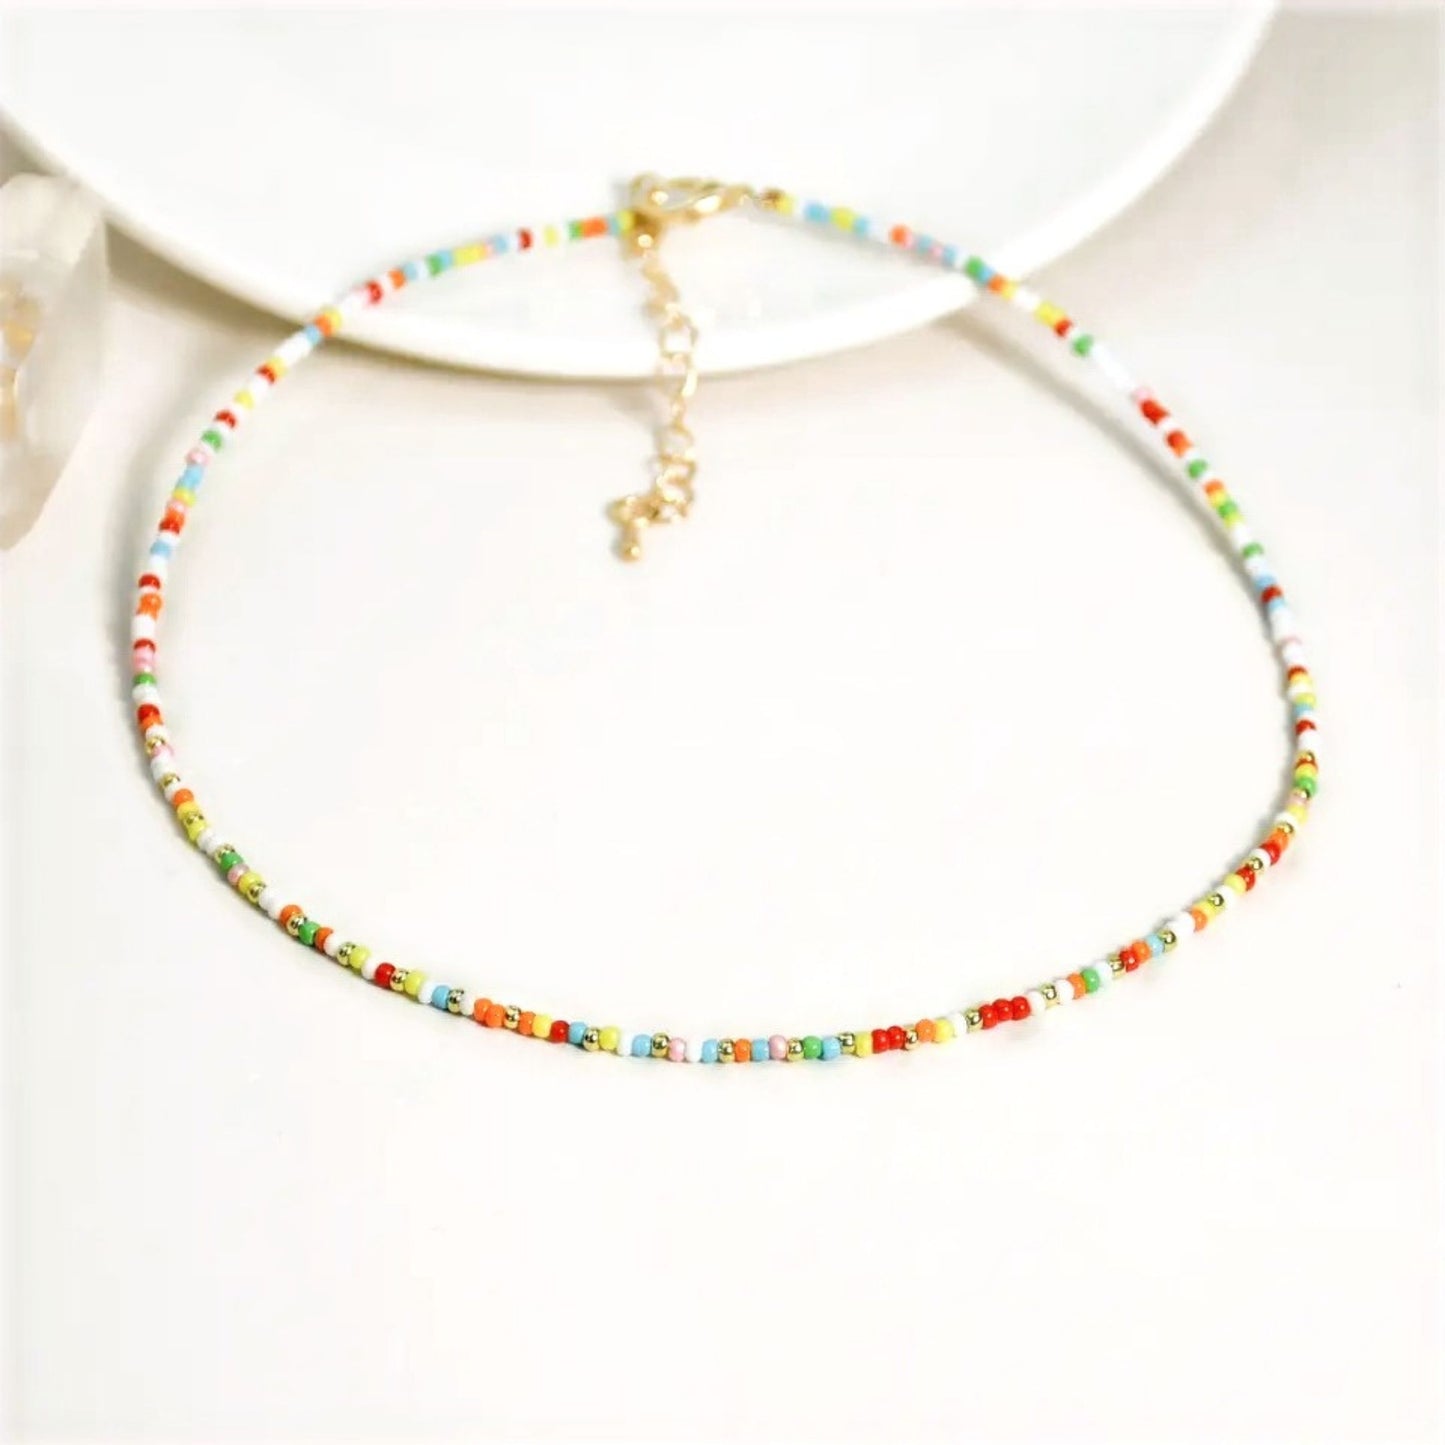 Handmade Pretty White Crystal Miyuki Beaded Necklace